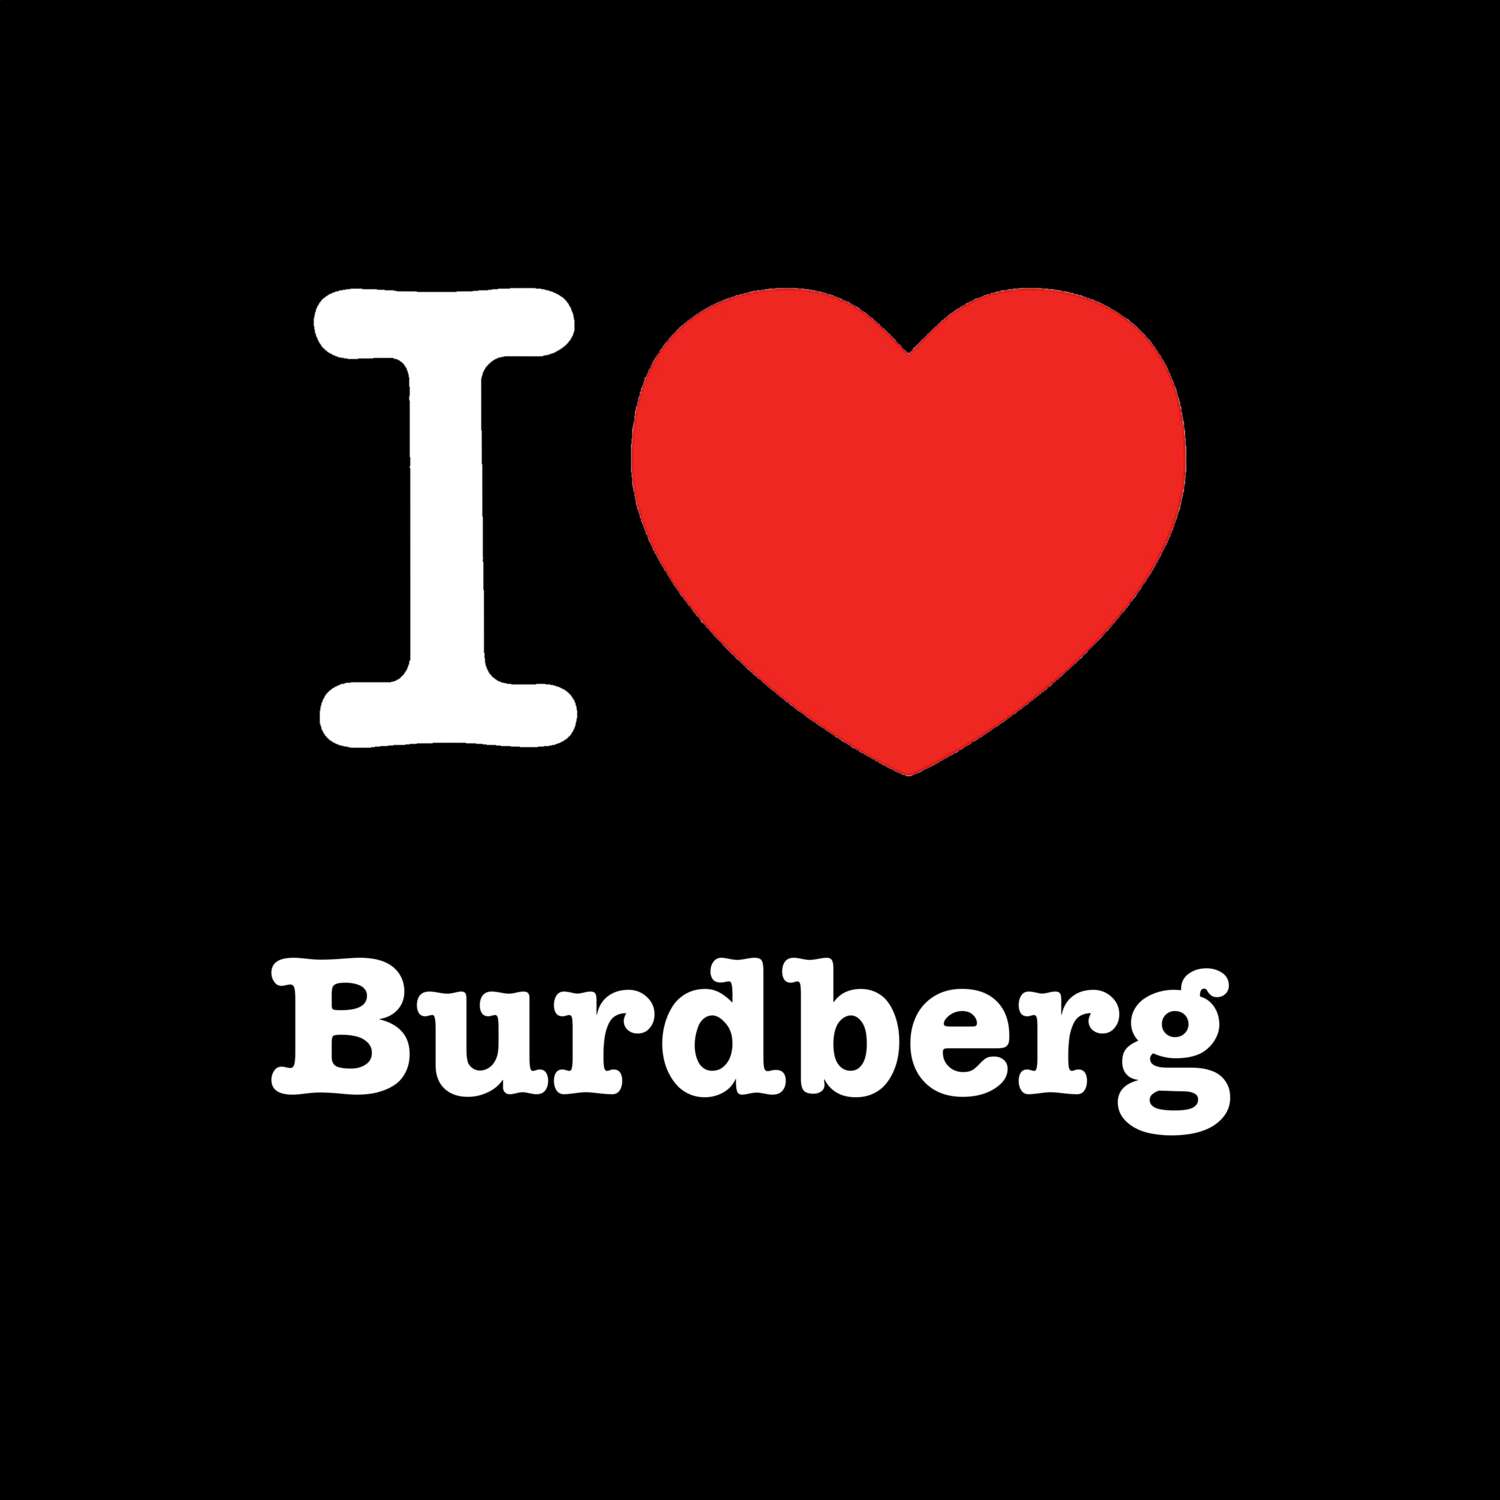 Burdberg T-Shirt »I love«